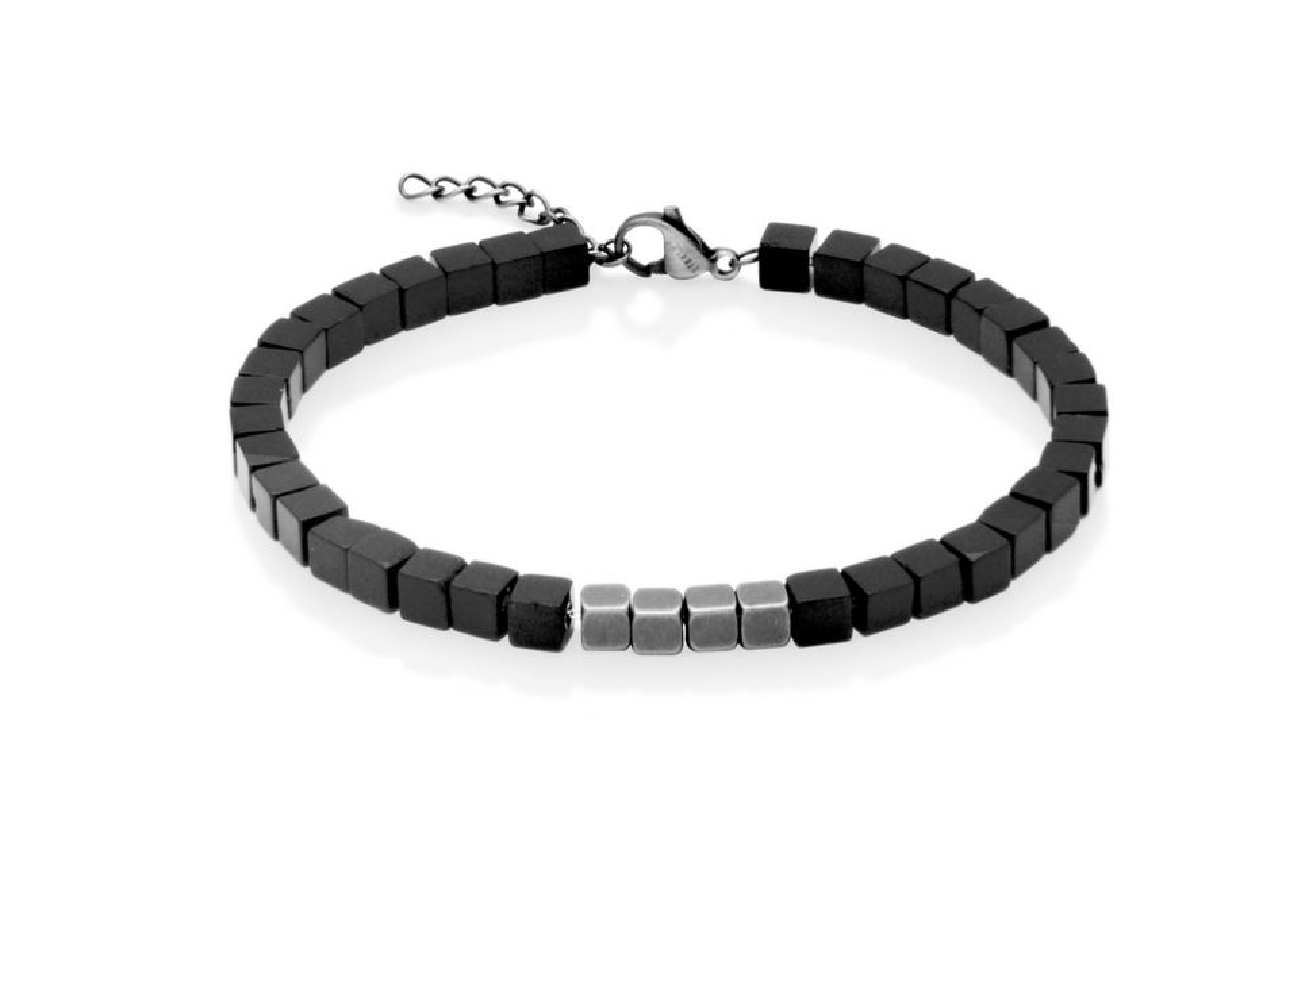 STEELX
Square Black Agate Bead Bracelet
5mm
...